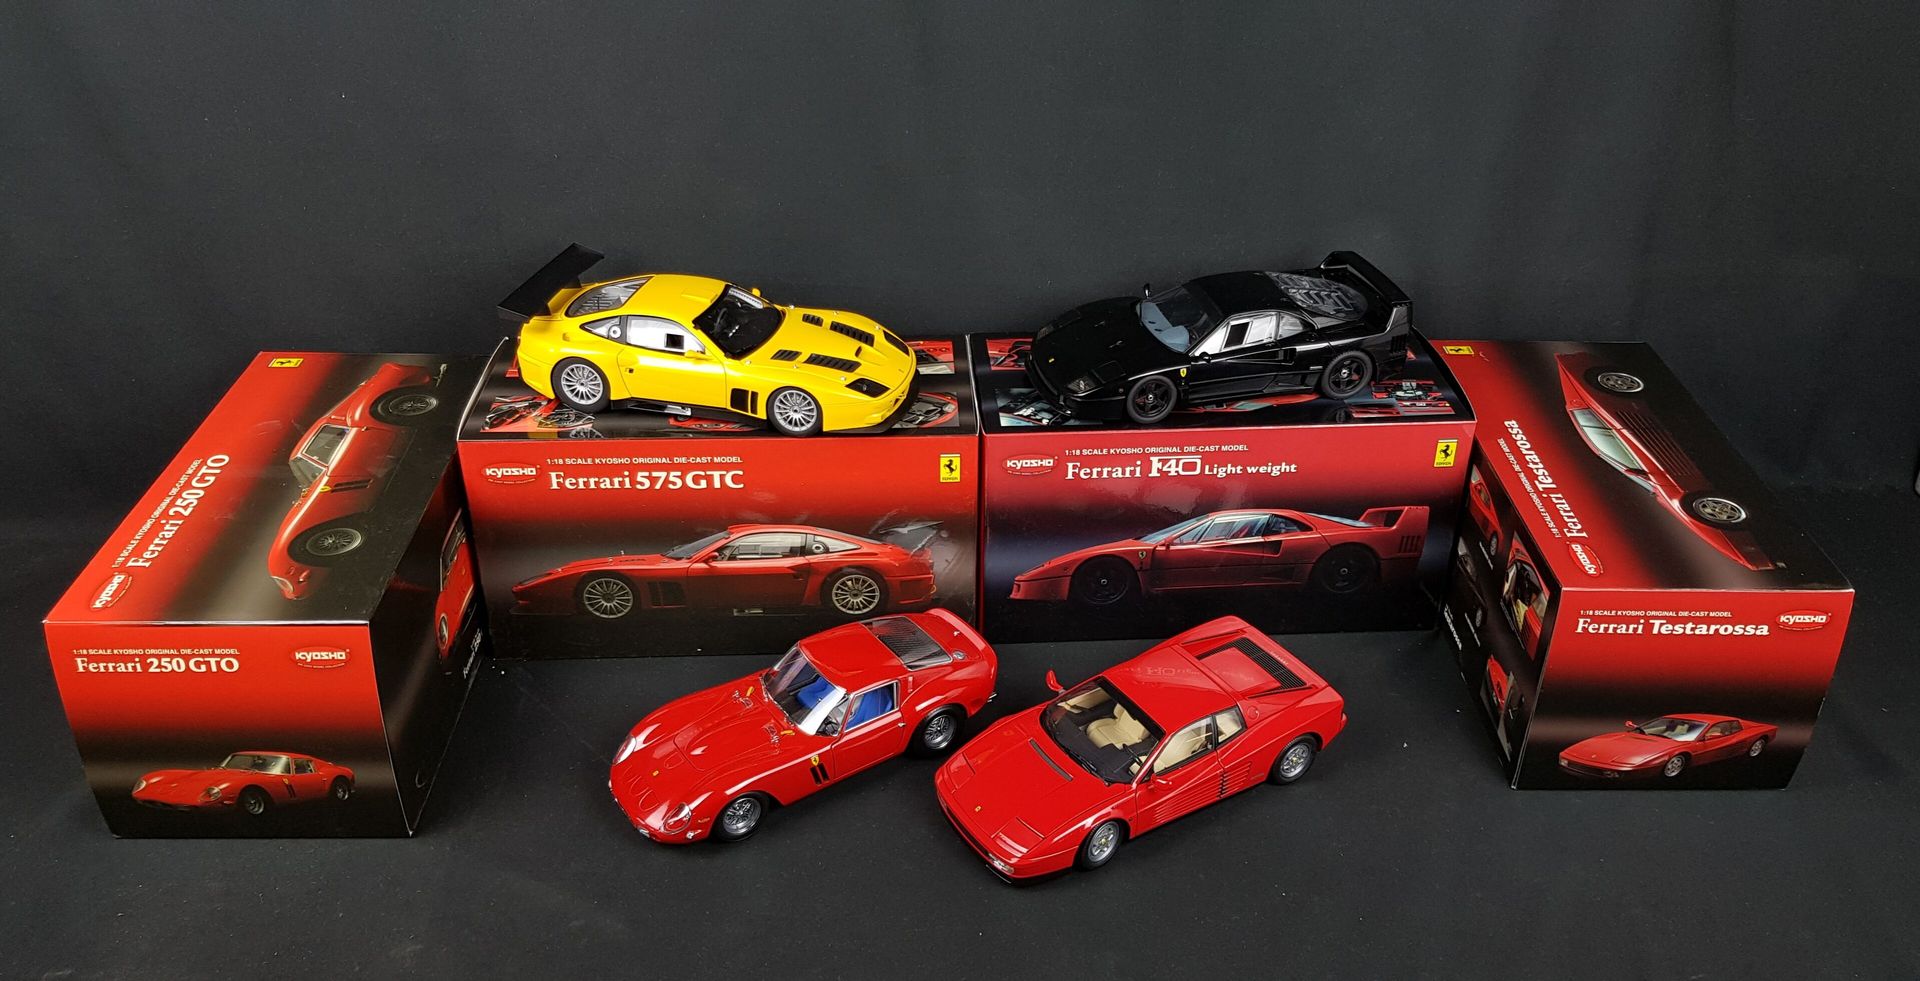 Null KYOSHO - FOUR Ferrari in scala 1/18:

1x F40 bianco chiaro

1x 575 GTC

1x &hellip;